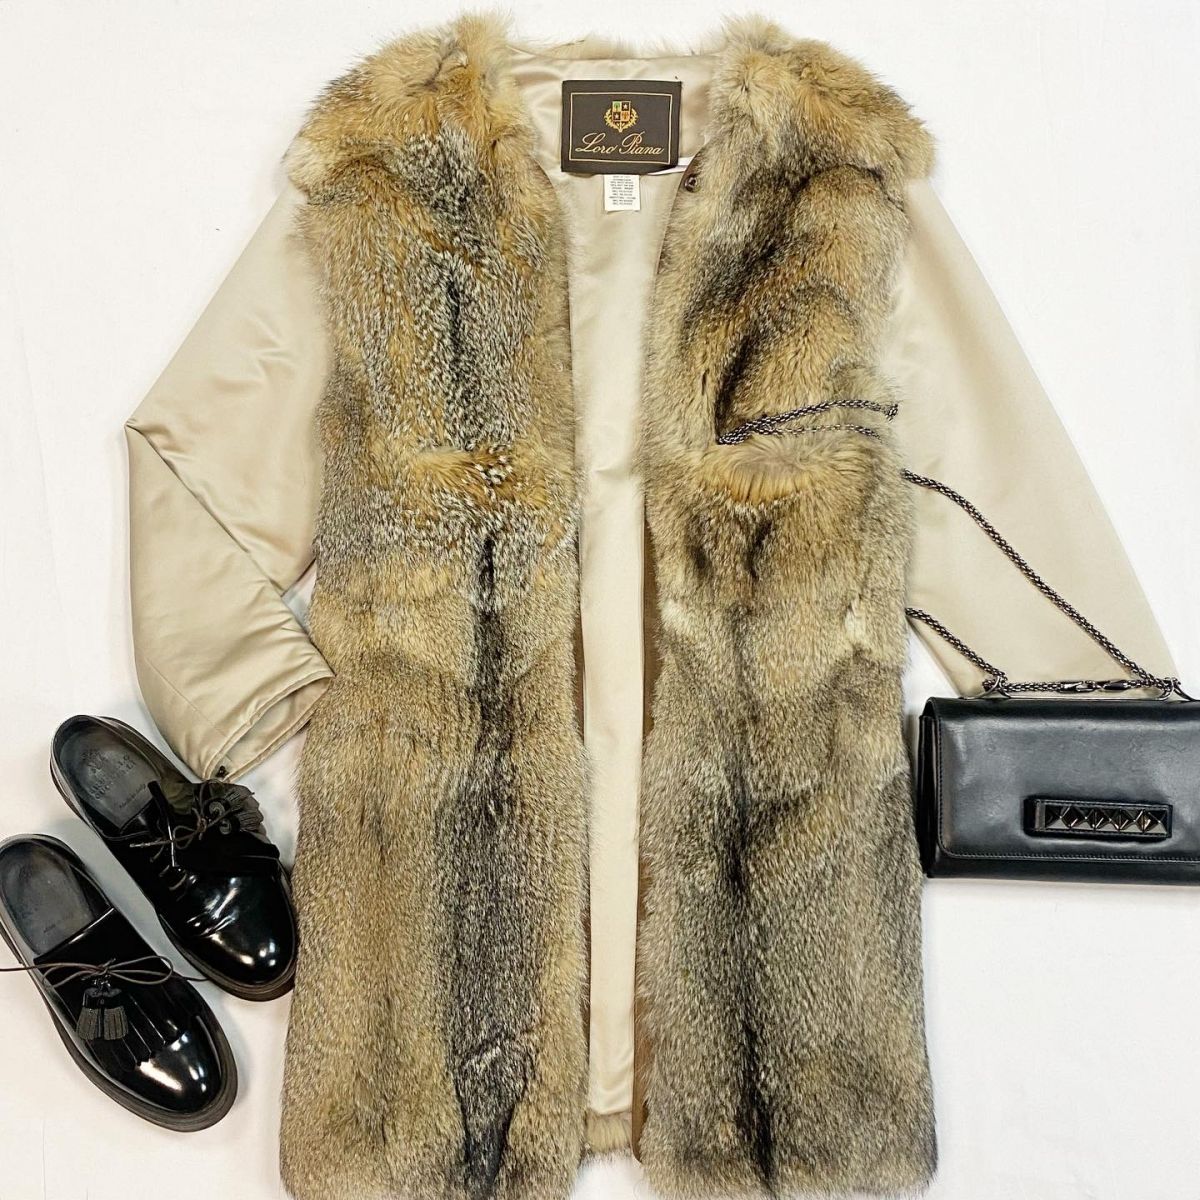 Пальто Loro Piana размер XL цена 38 463 рубЛоферы Brunello Cucunelli размер 37 цена 15 385 рубСумка Valentino